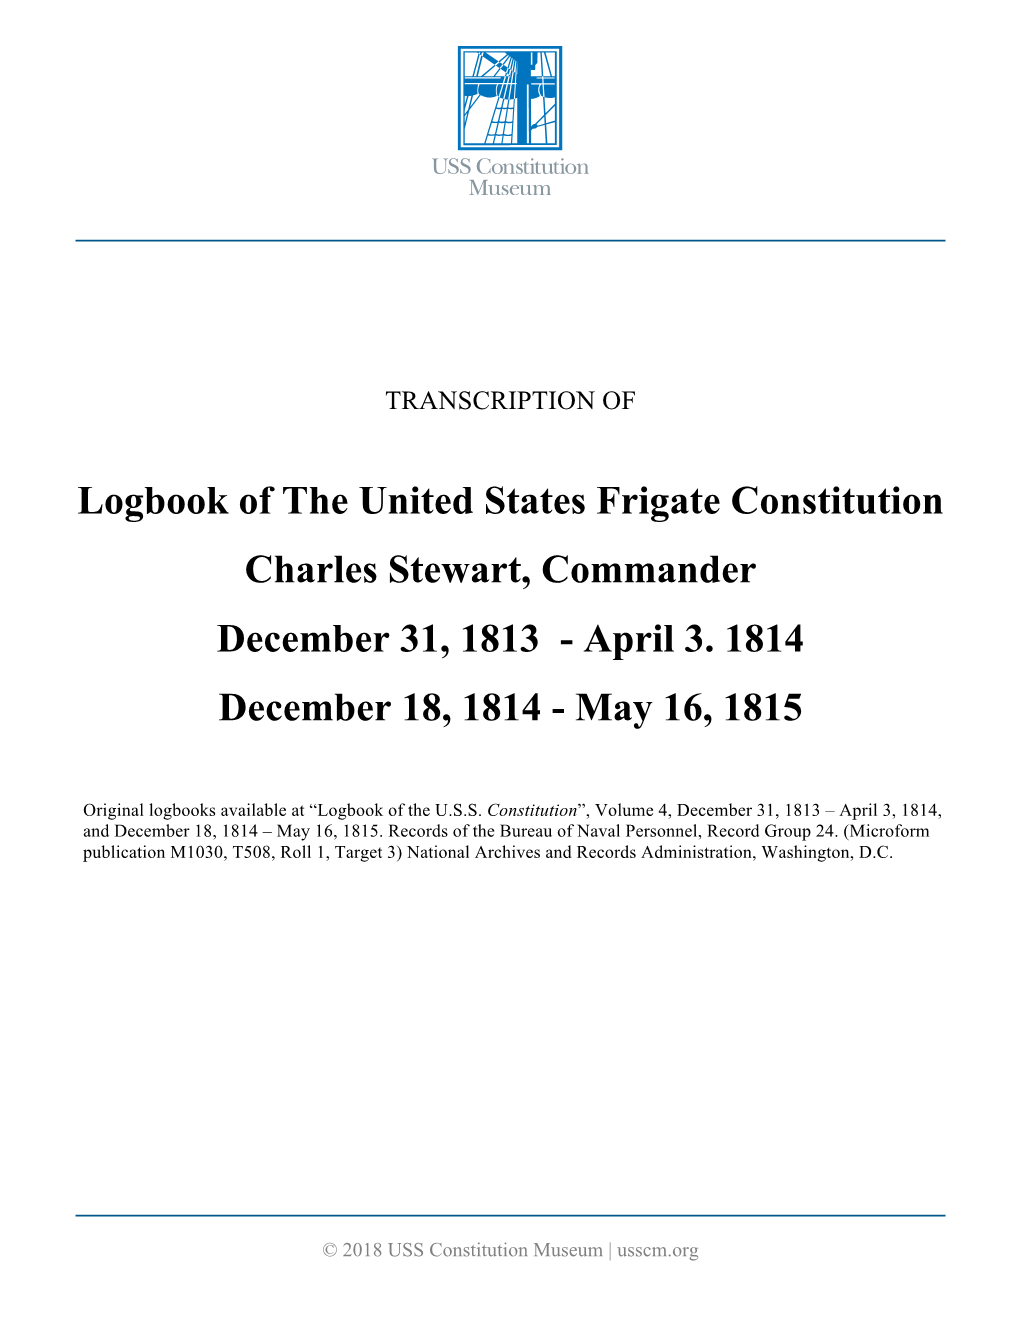 Logbook of the United States Frigate Constitution Charles Stewart, Commander December 31, 1813 - April 3